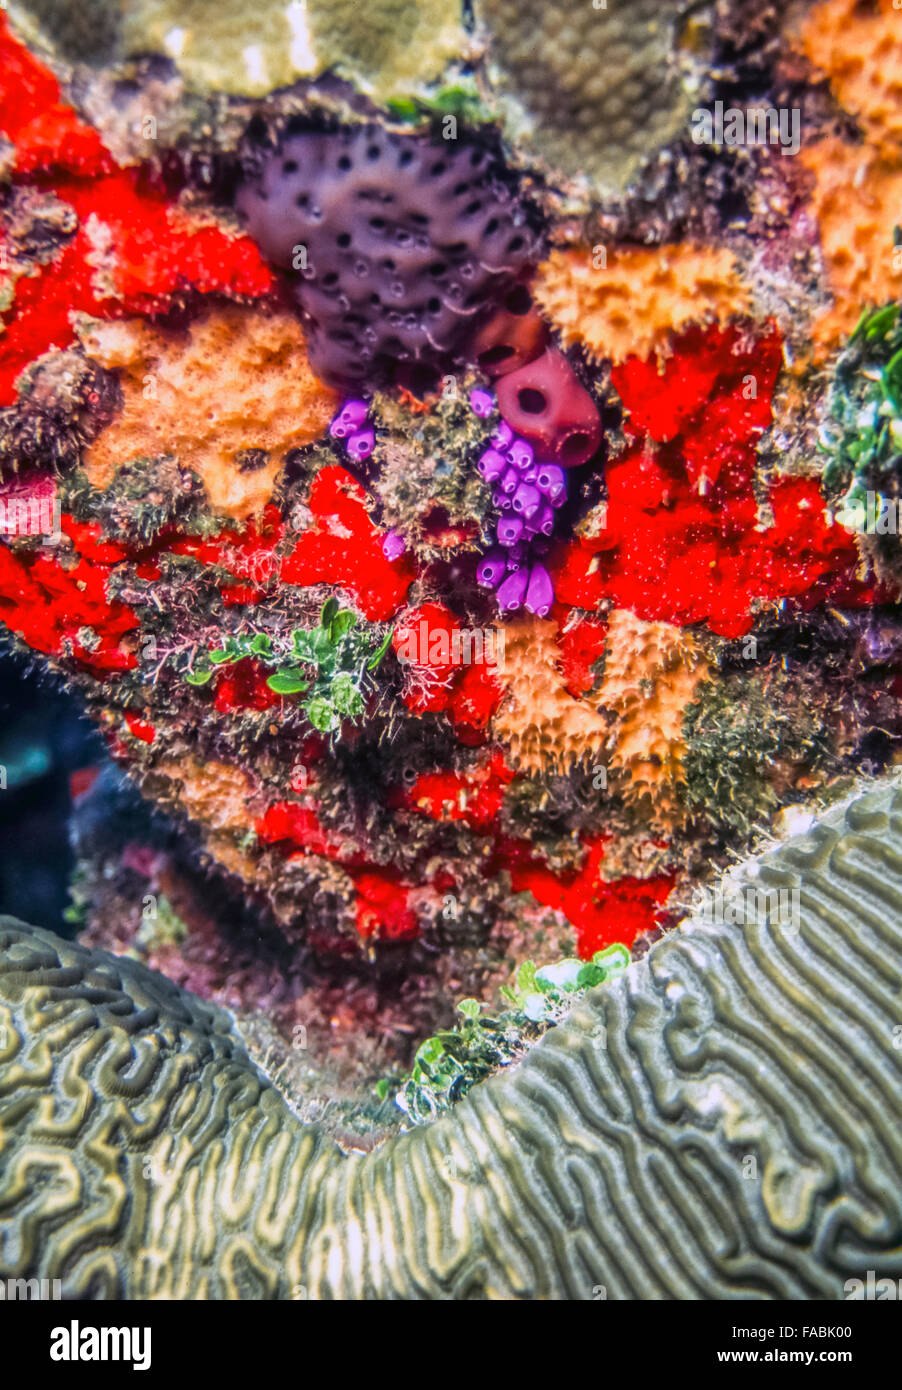 Coral reef off the coast of Roatan Honduras Stock Photo